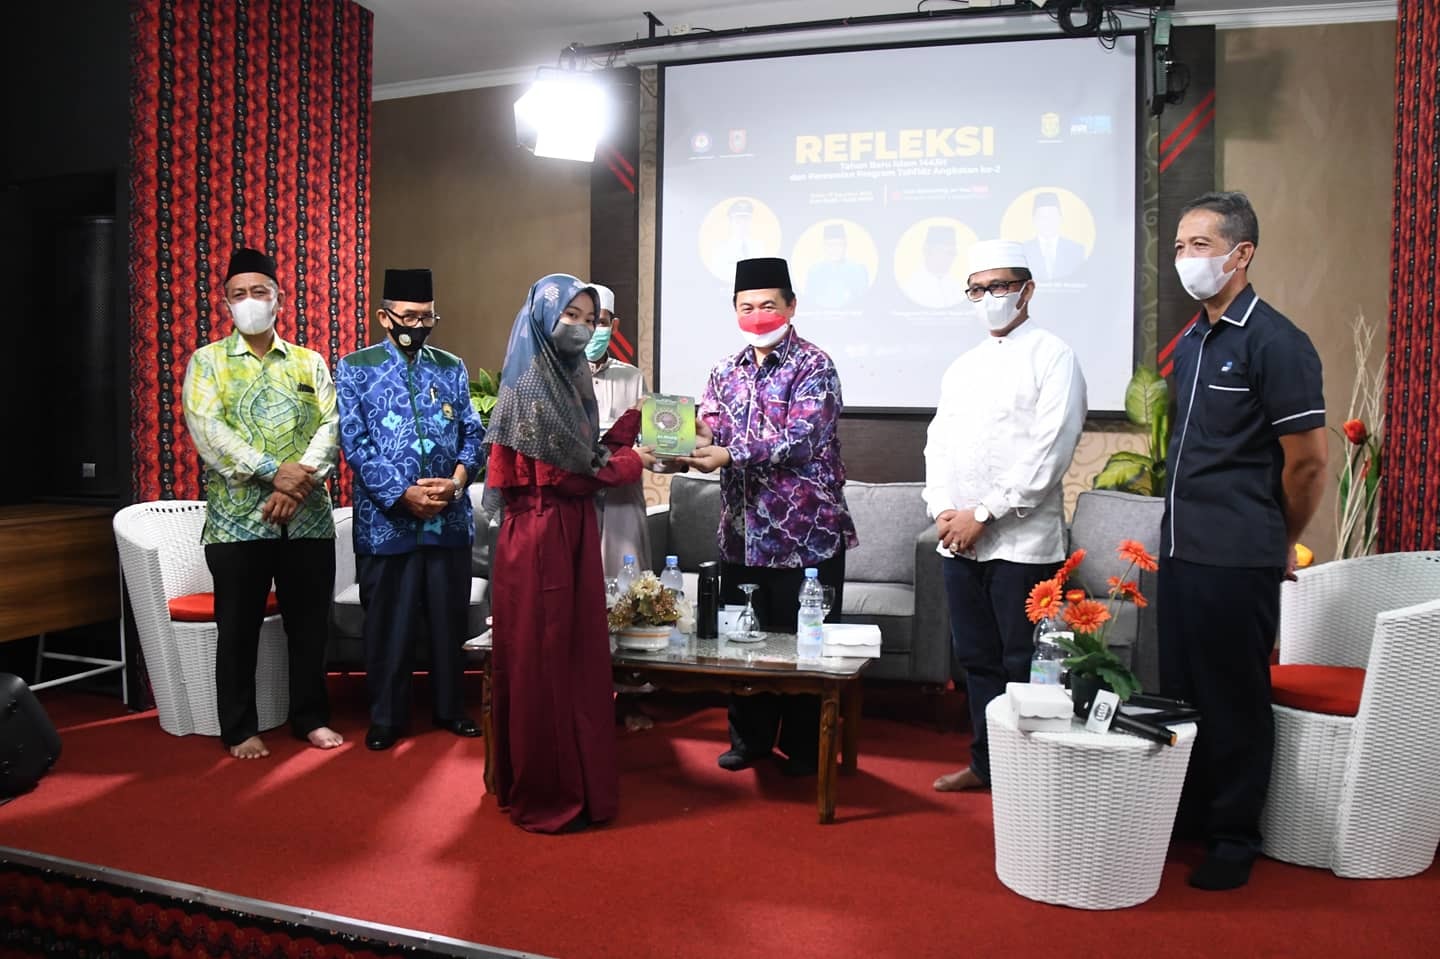 Narasumber Refleksi Tahun Baru Islam, Walikota Launching Program